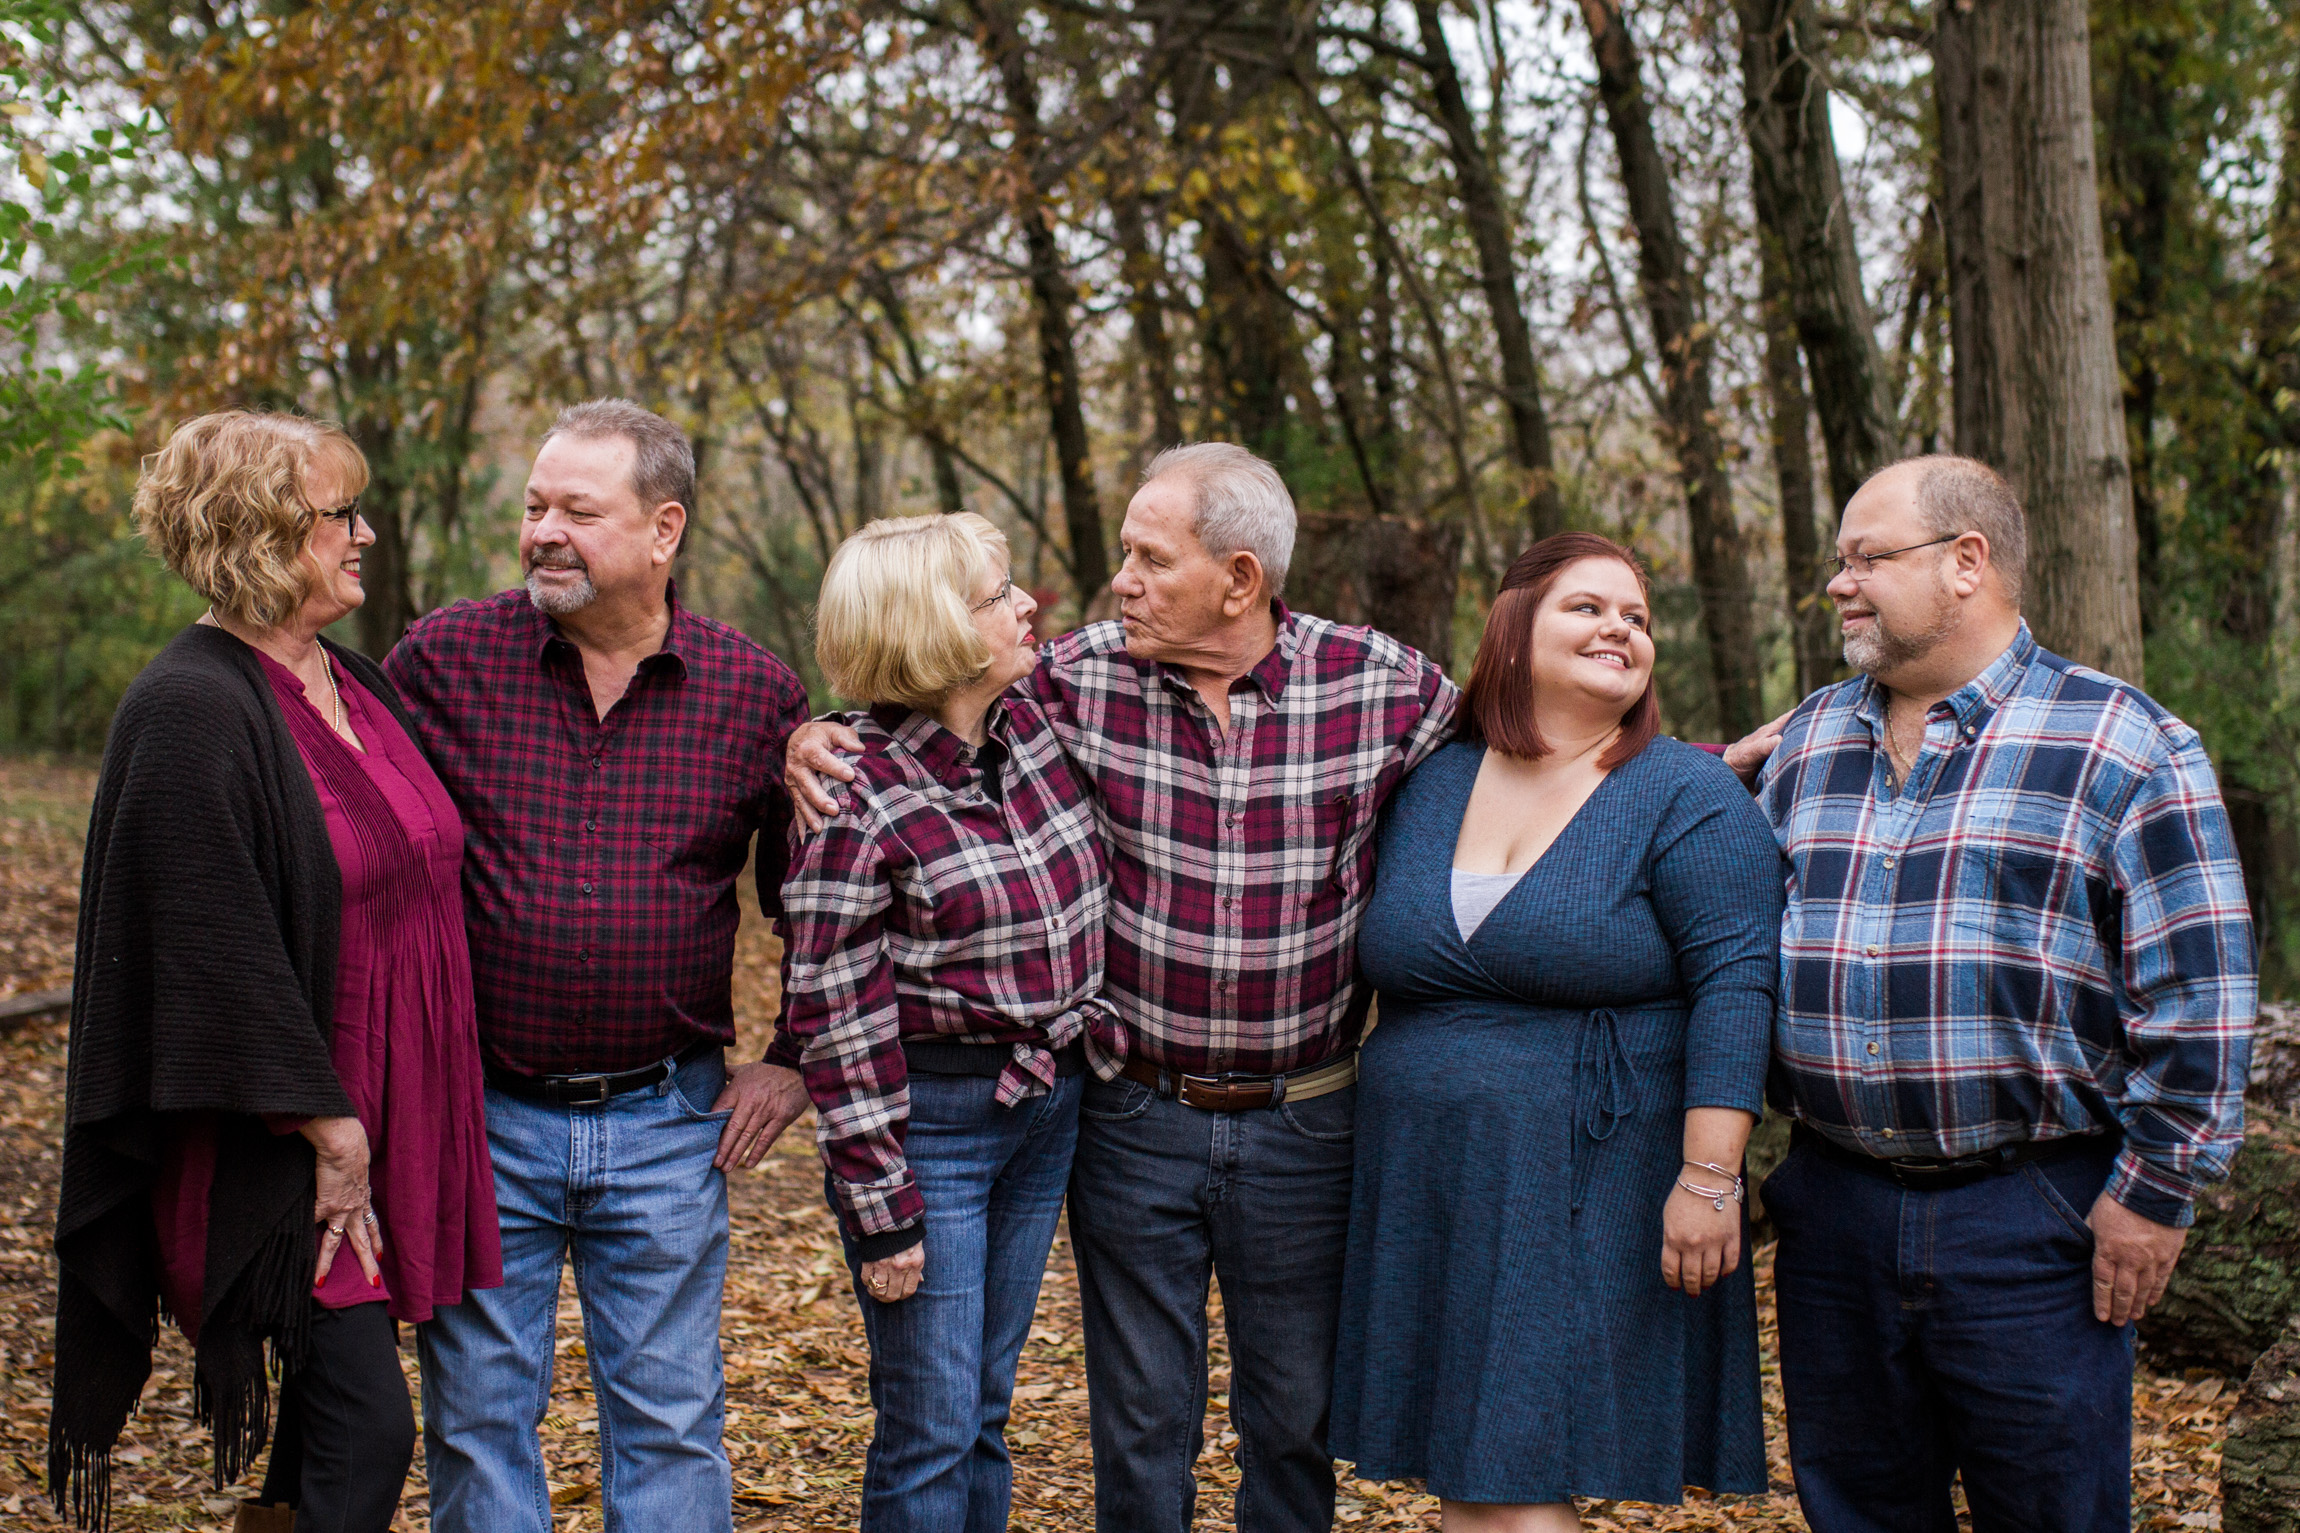  Kansas City lifestyle photographer, Kansas City family photographer, extended family session, fall family photos in the woods 